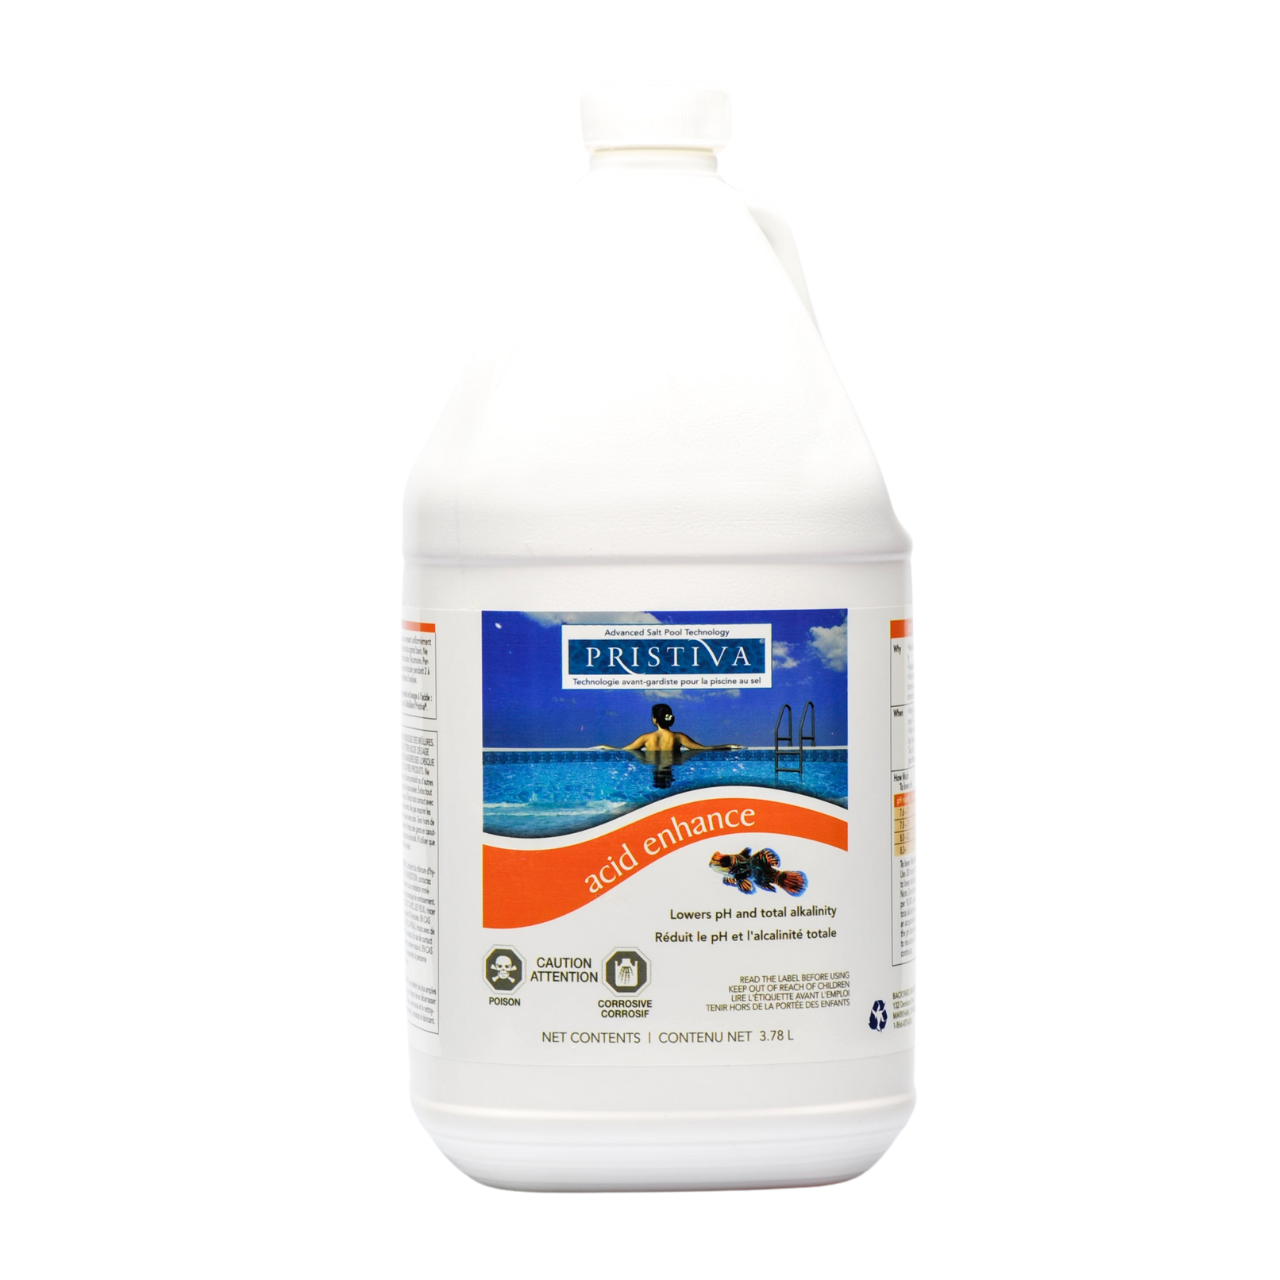 Pristiva® Acid Enhance - Safer Liquid Acid for Lowering pH and Total Alkalinity in a Salt Pool